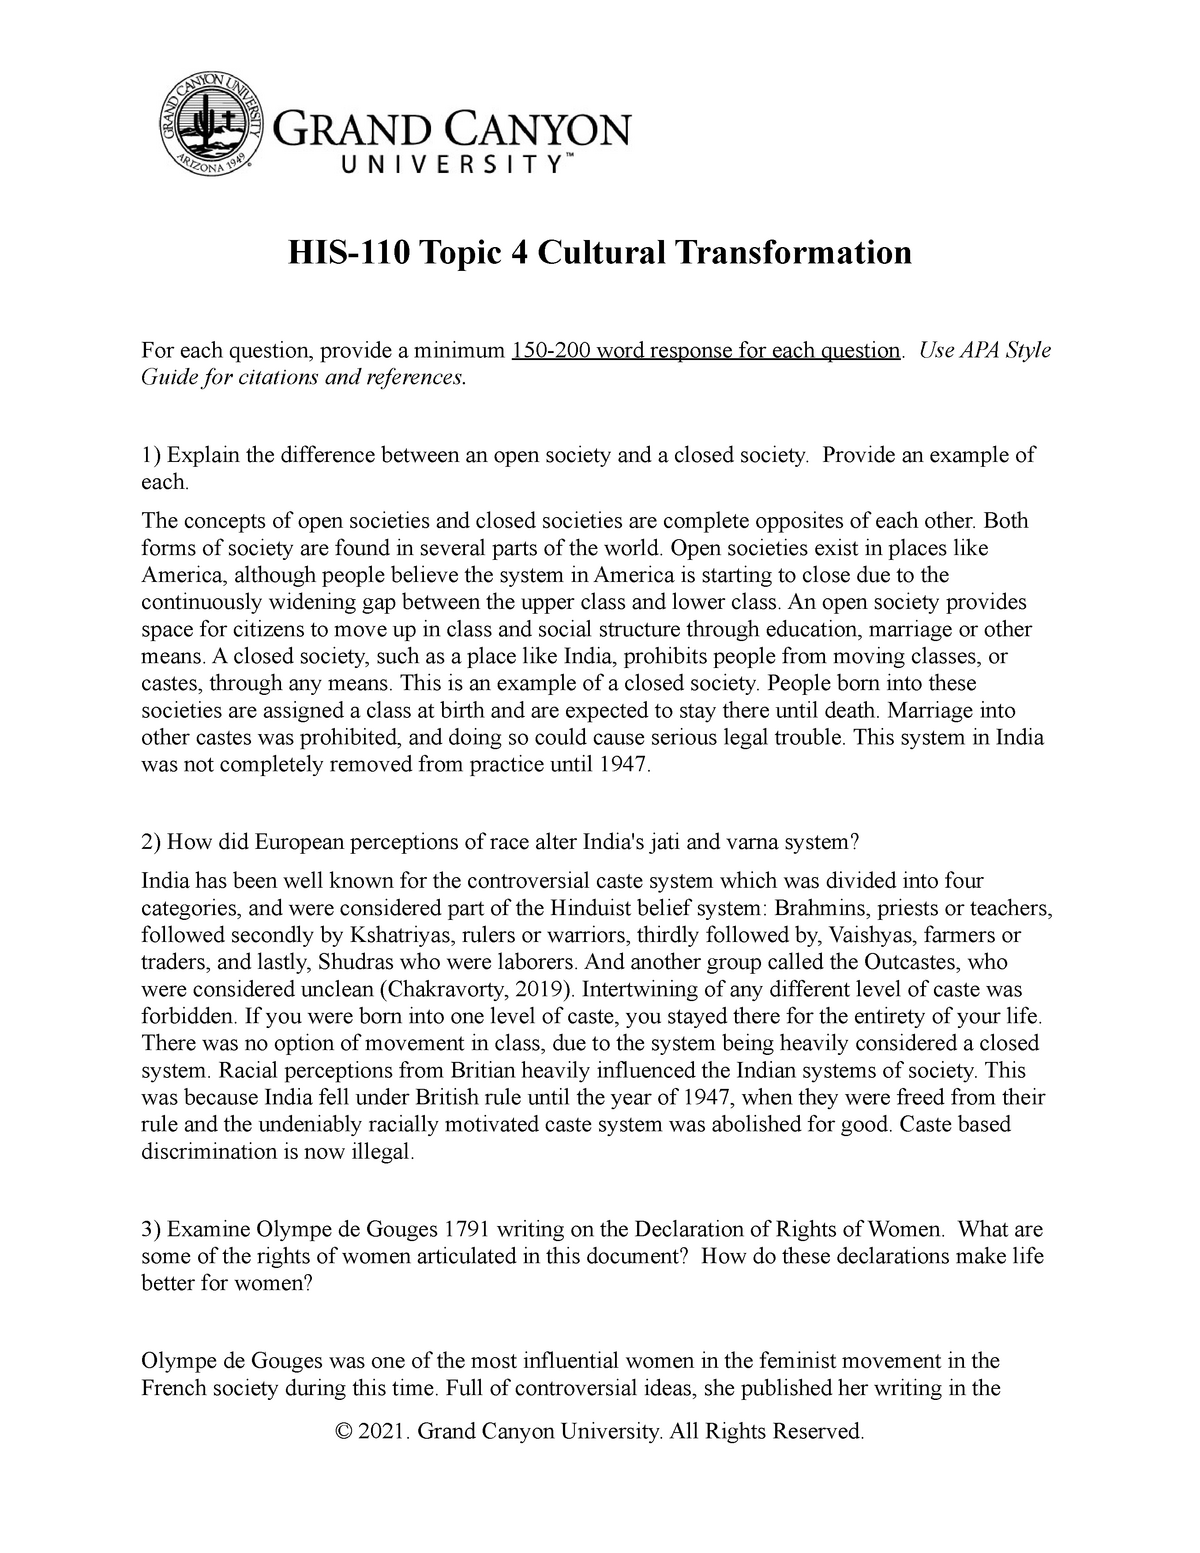 cultural transformation essay